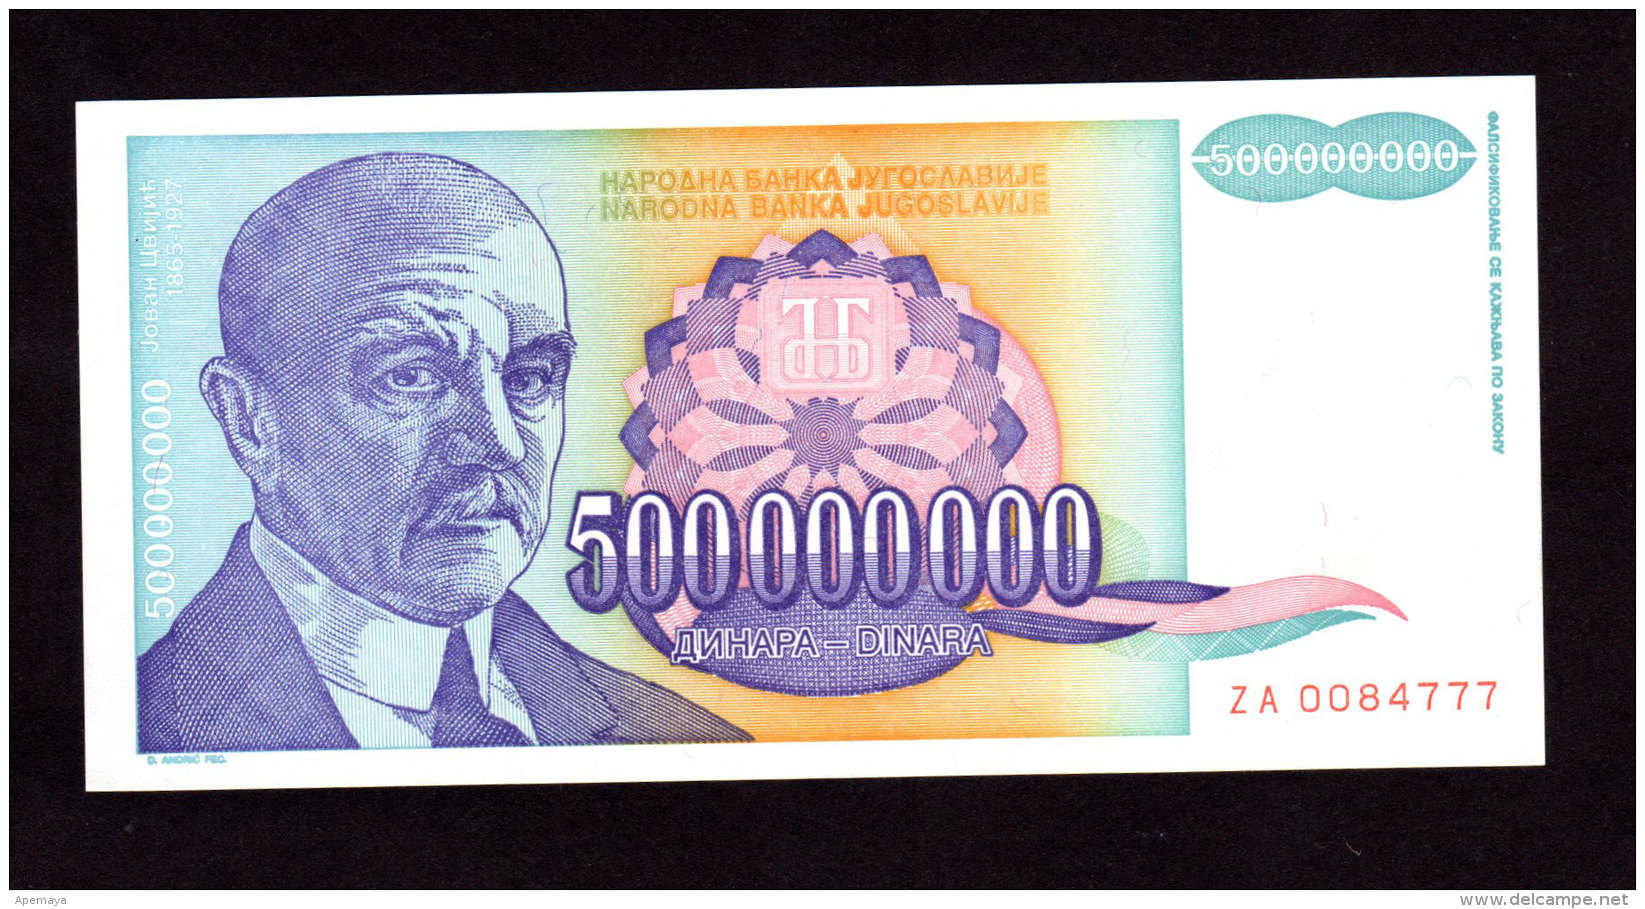 Replacement. Jugoslavia 500000000 Dinara ZA 1993. UNC!!!! - Yougoslavie